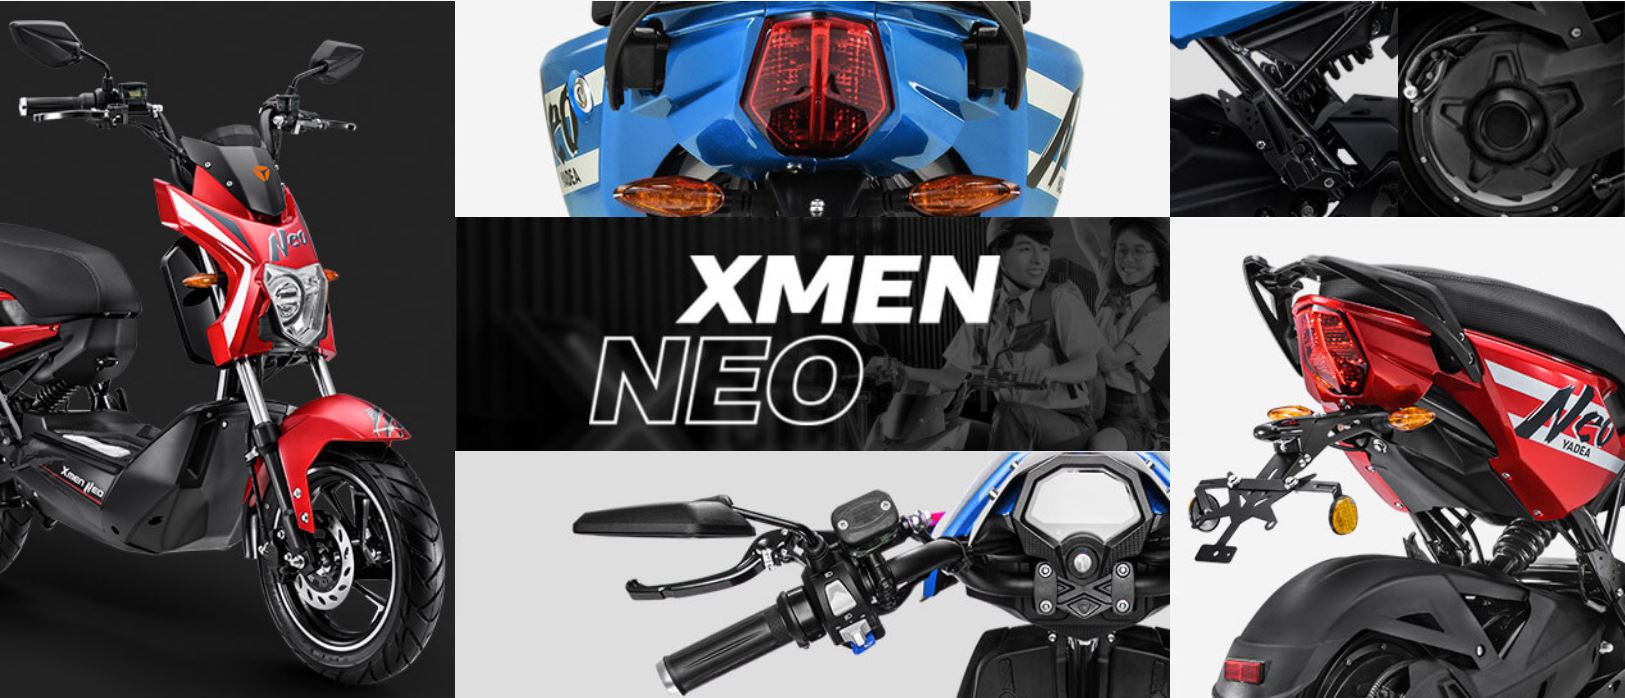 Đánh giá xe máy điện YADEA Xmen Neo 2